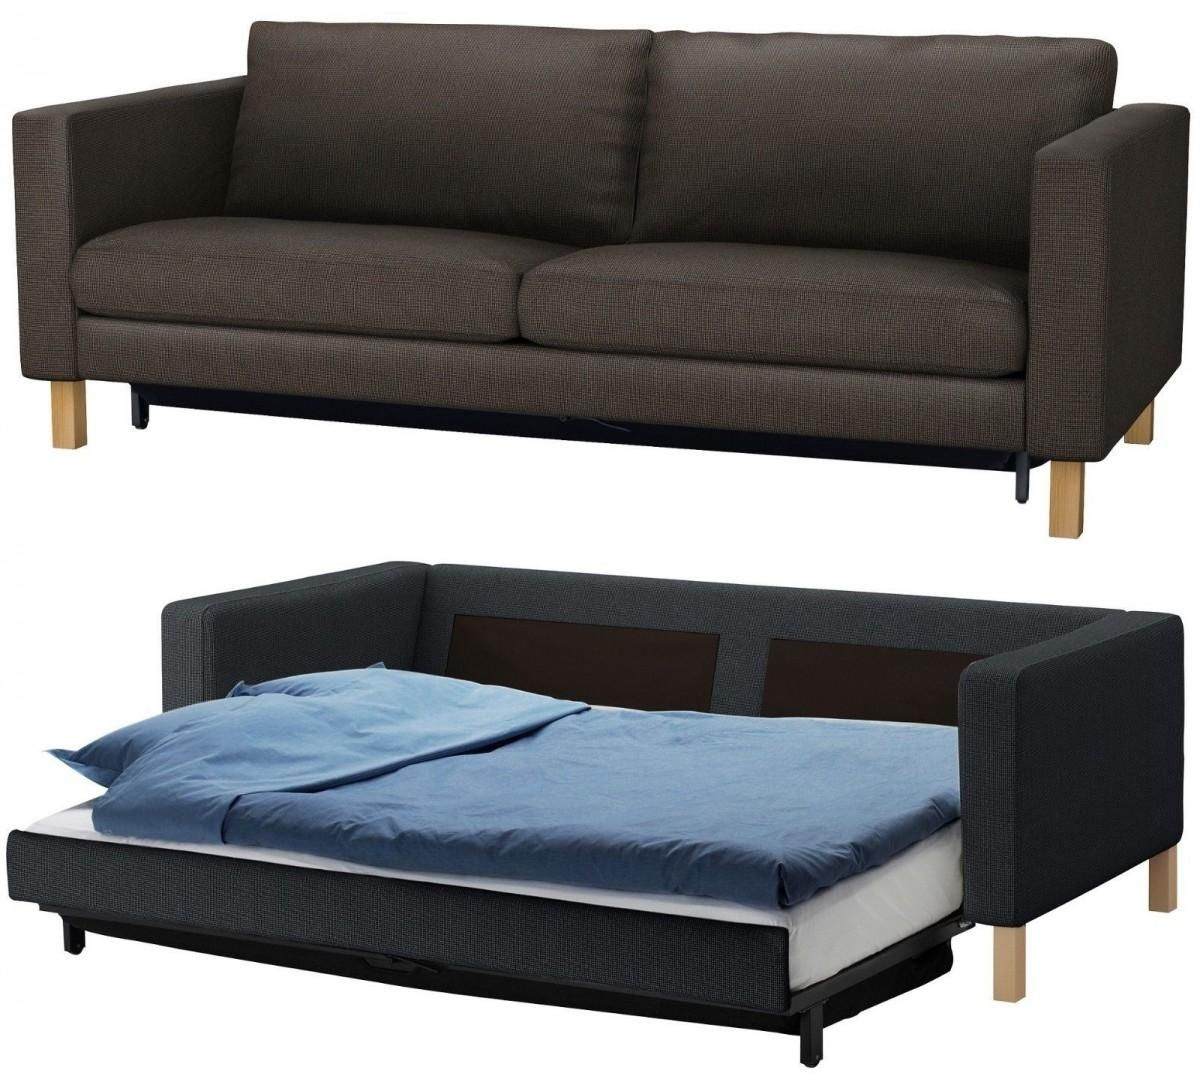 Loveseat Sofa Bed Ikea | Tehranmix Decoration Throughout Ikea Loveseat Sleeper Sofas (View 8 of 20)